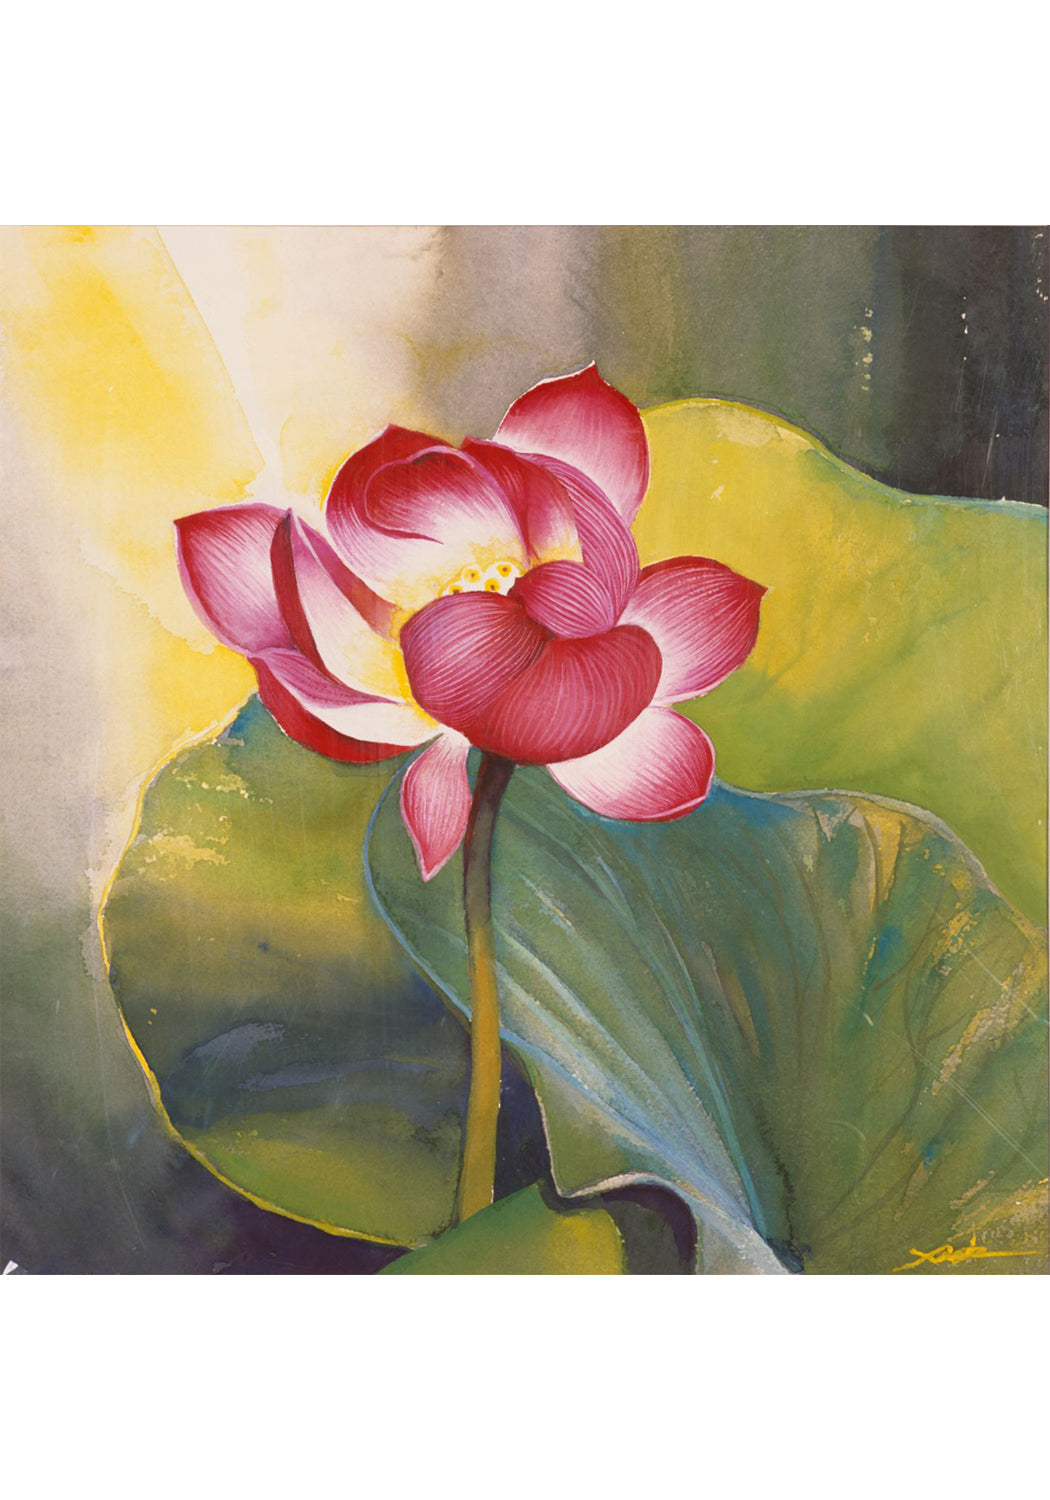 Lotus in the Morning Light